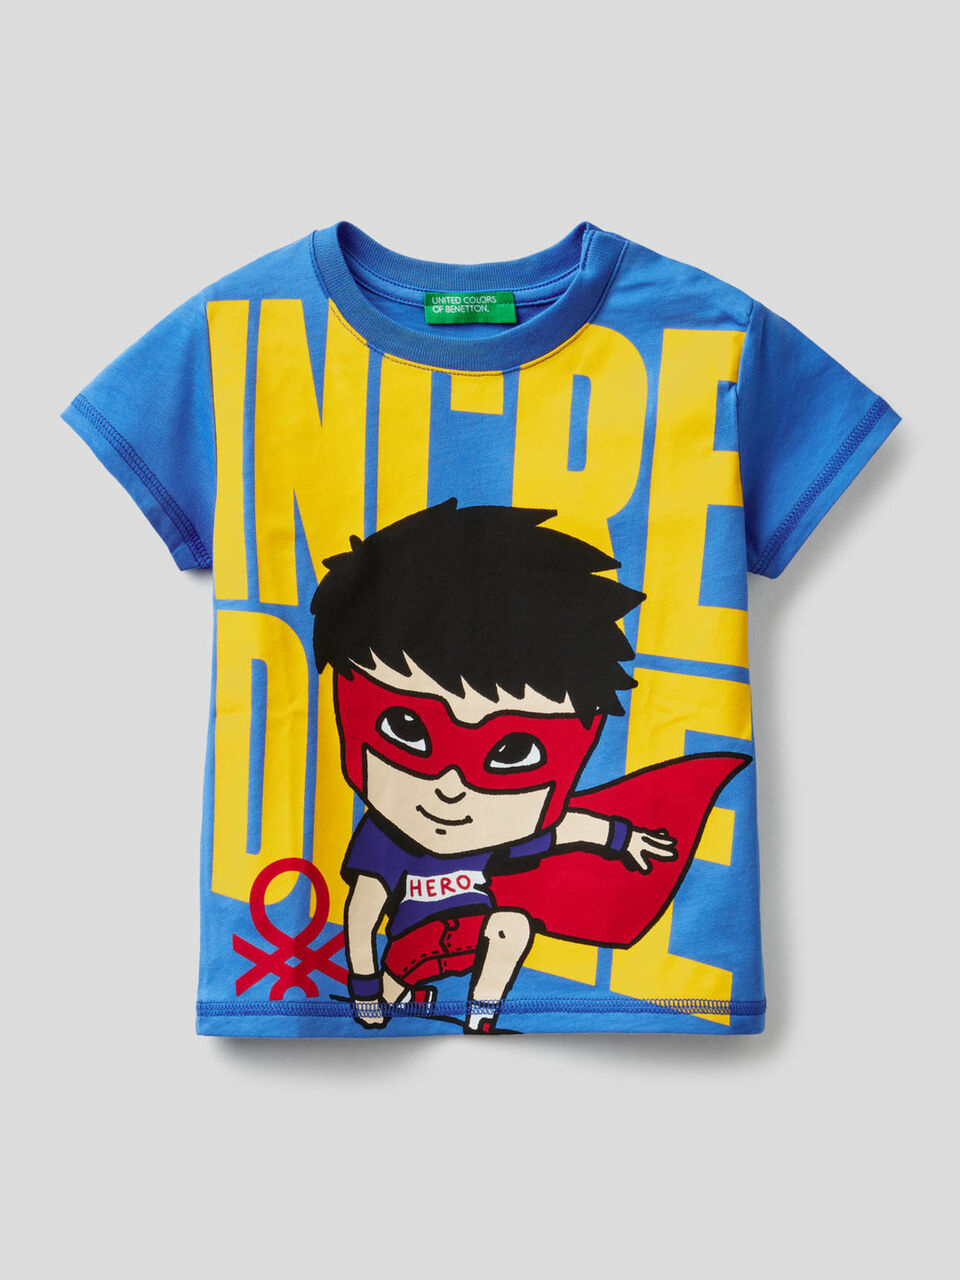 100% cotton t-shirt with superhero print